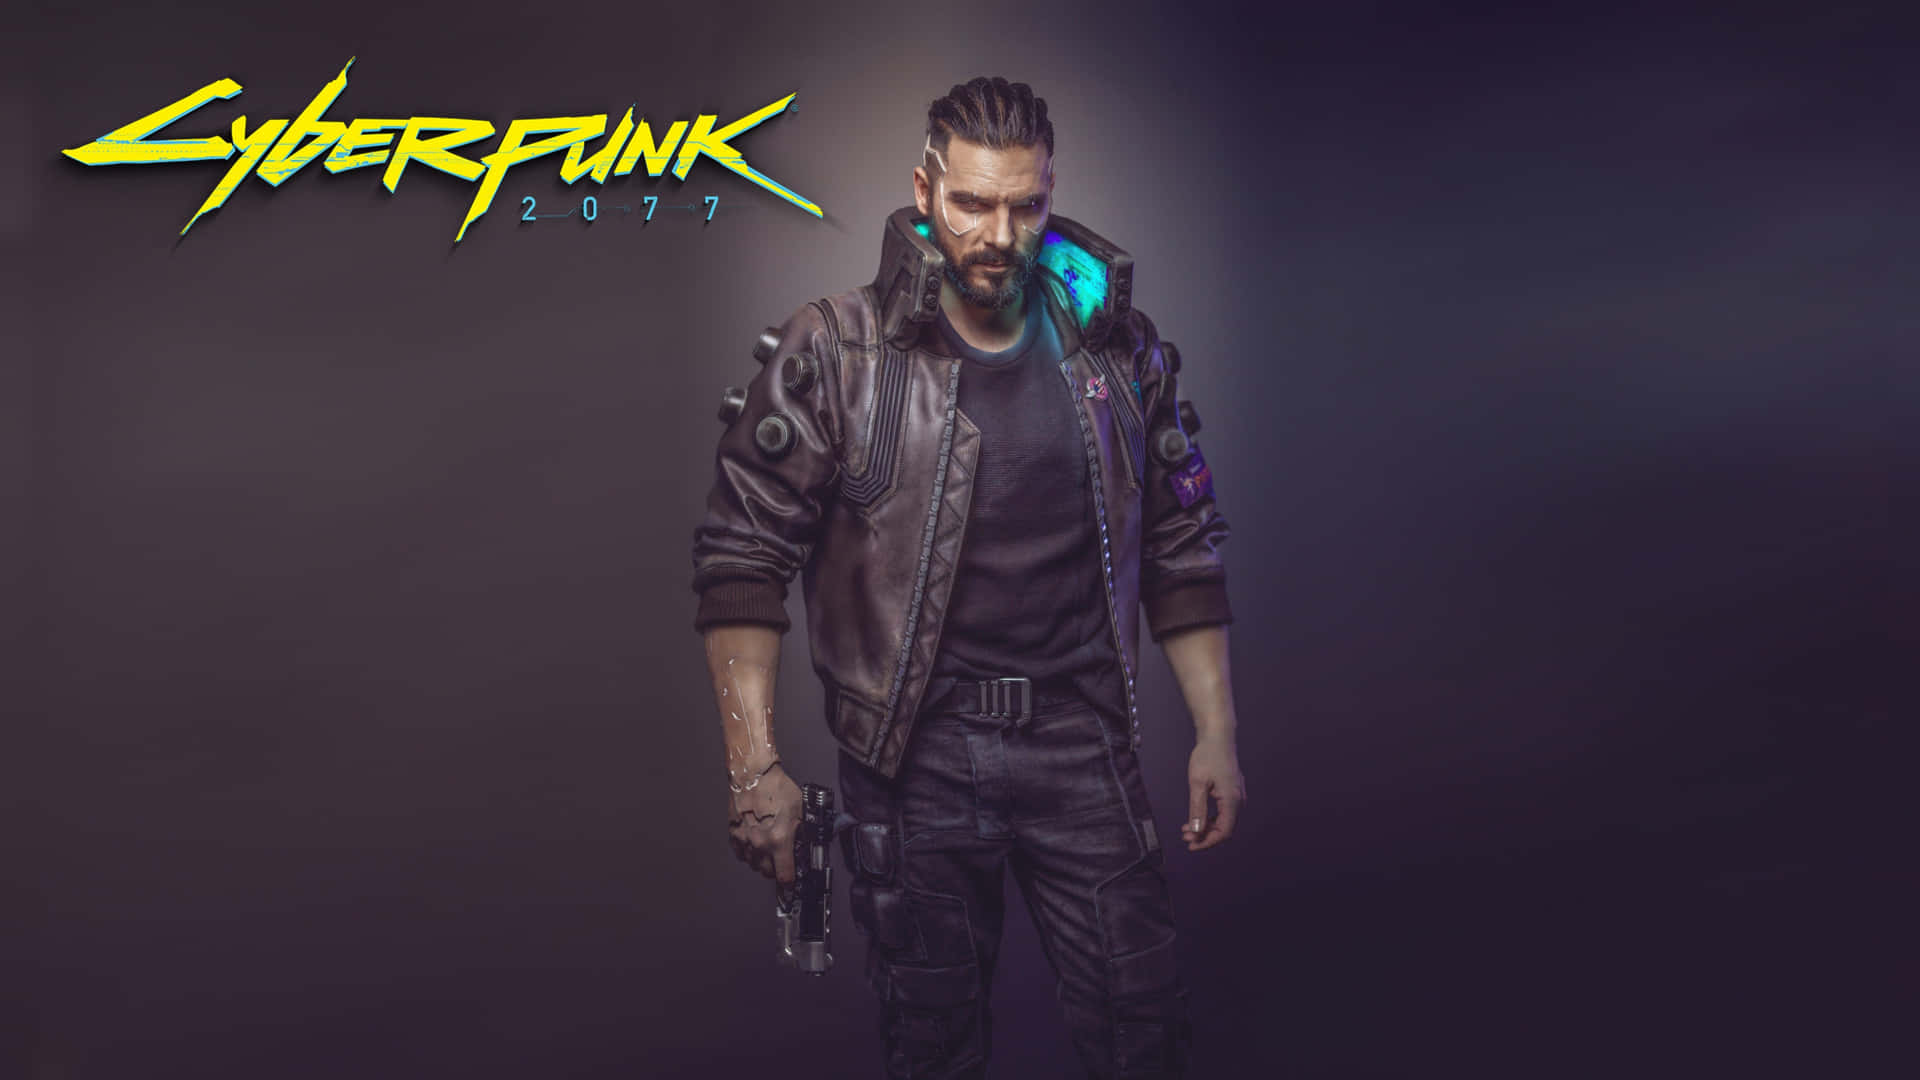 Manlighuvudperson 1440p Cyberpunk 2077 Bakgrundsbild.